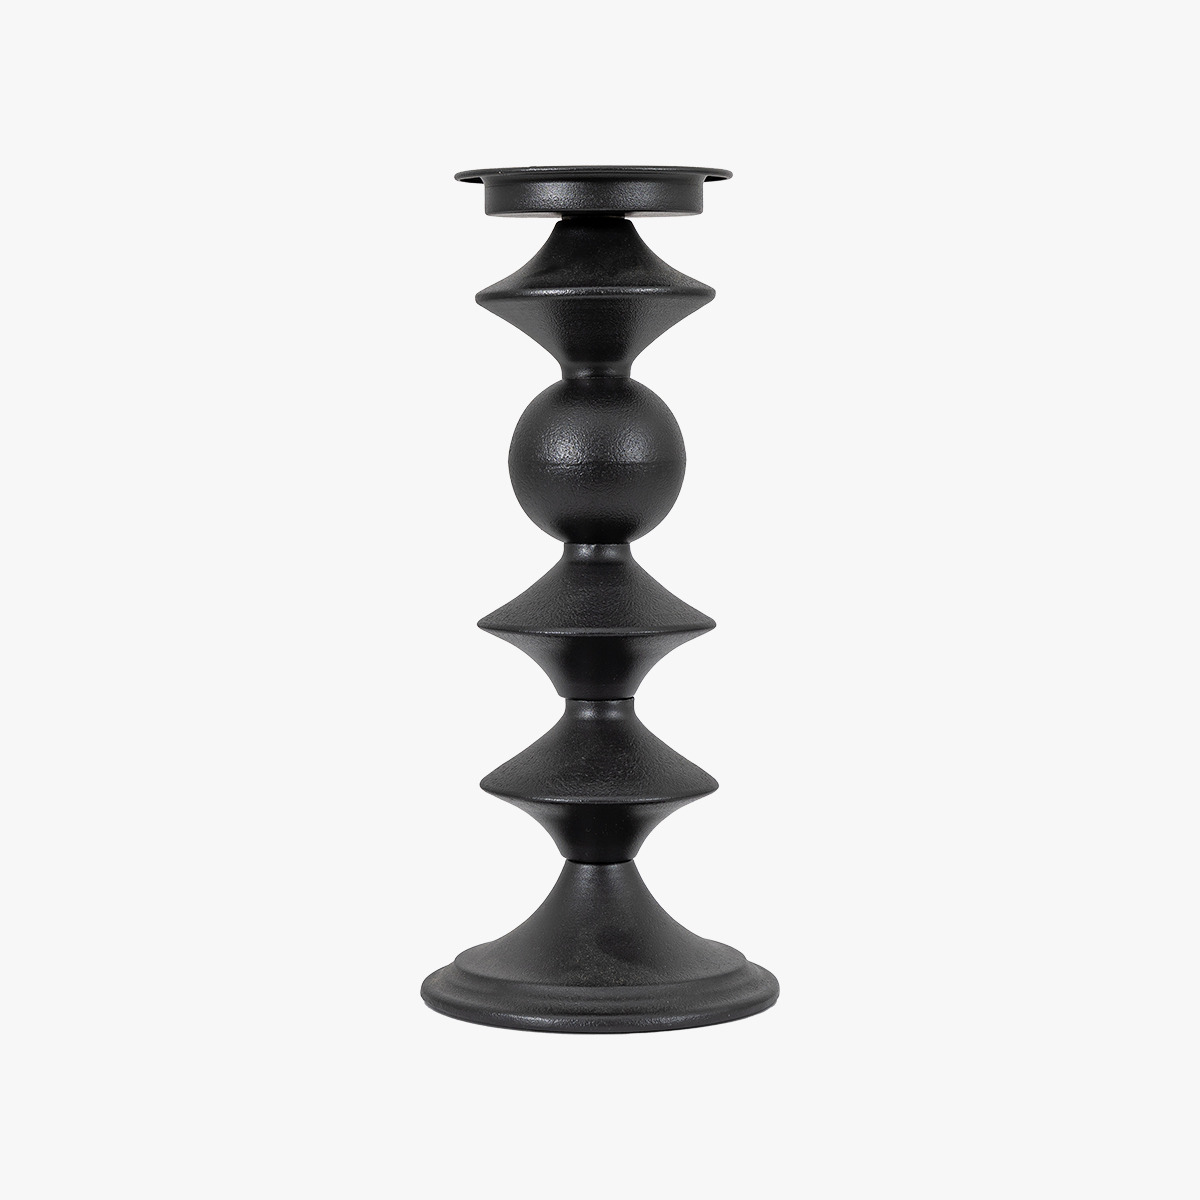 Onyx Pillar Candlestick in Black - Large